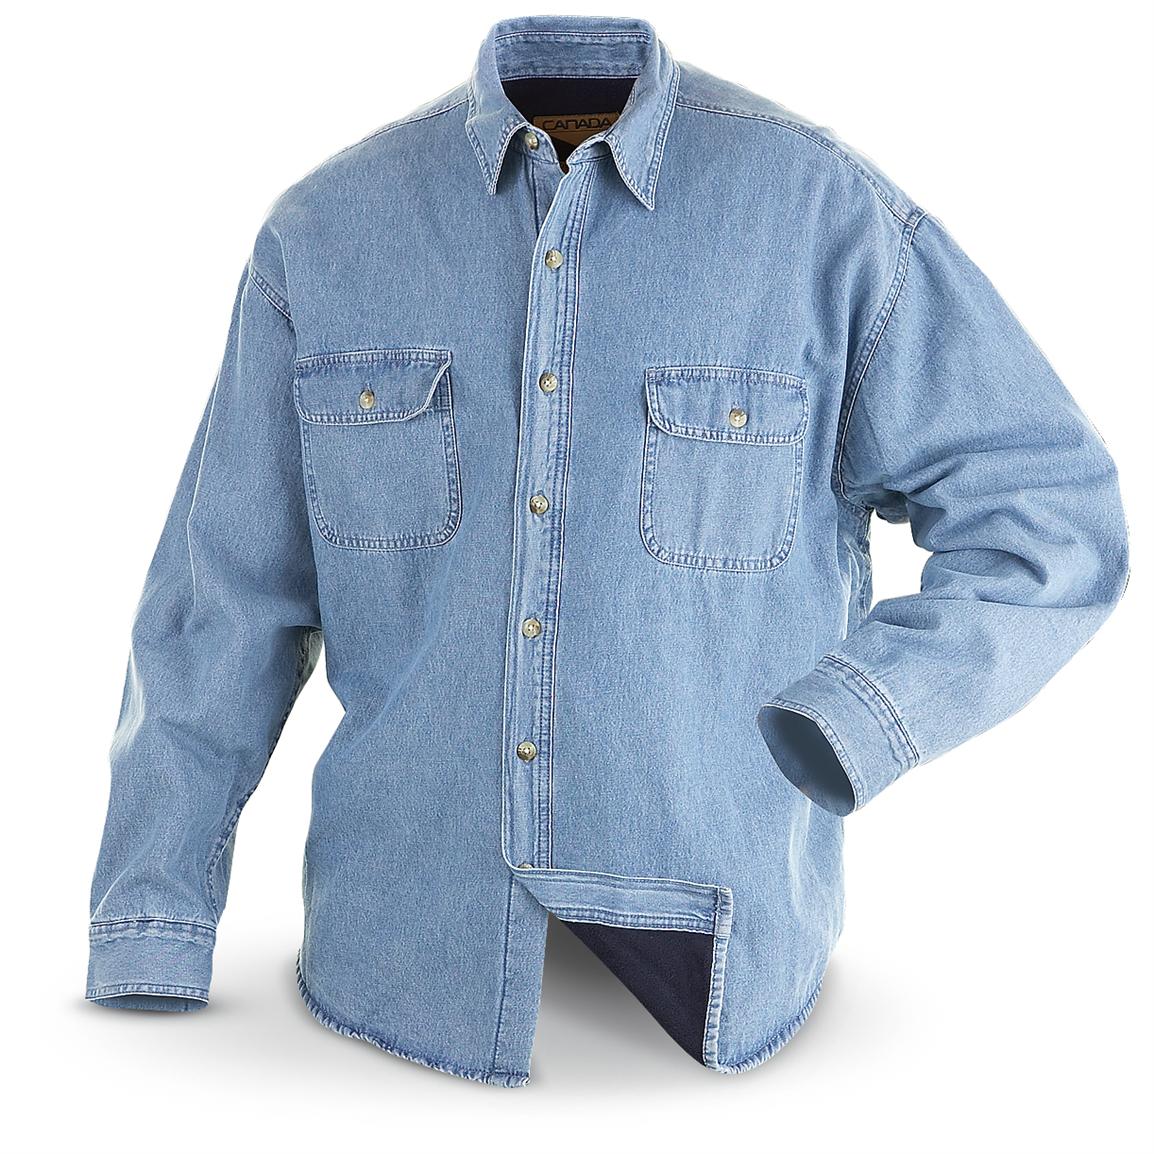 2 Fleece - lined Denim Shirts, Stonewash Blue - 181872, Shirts at ...